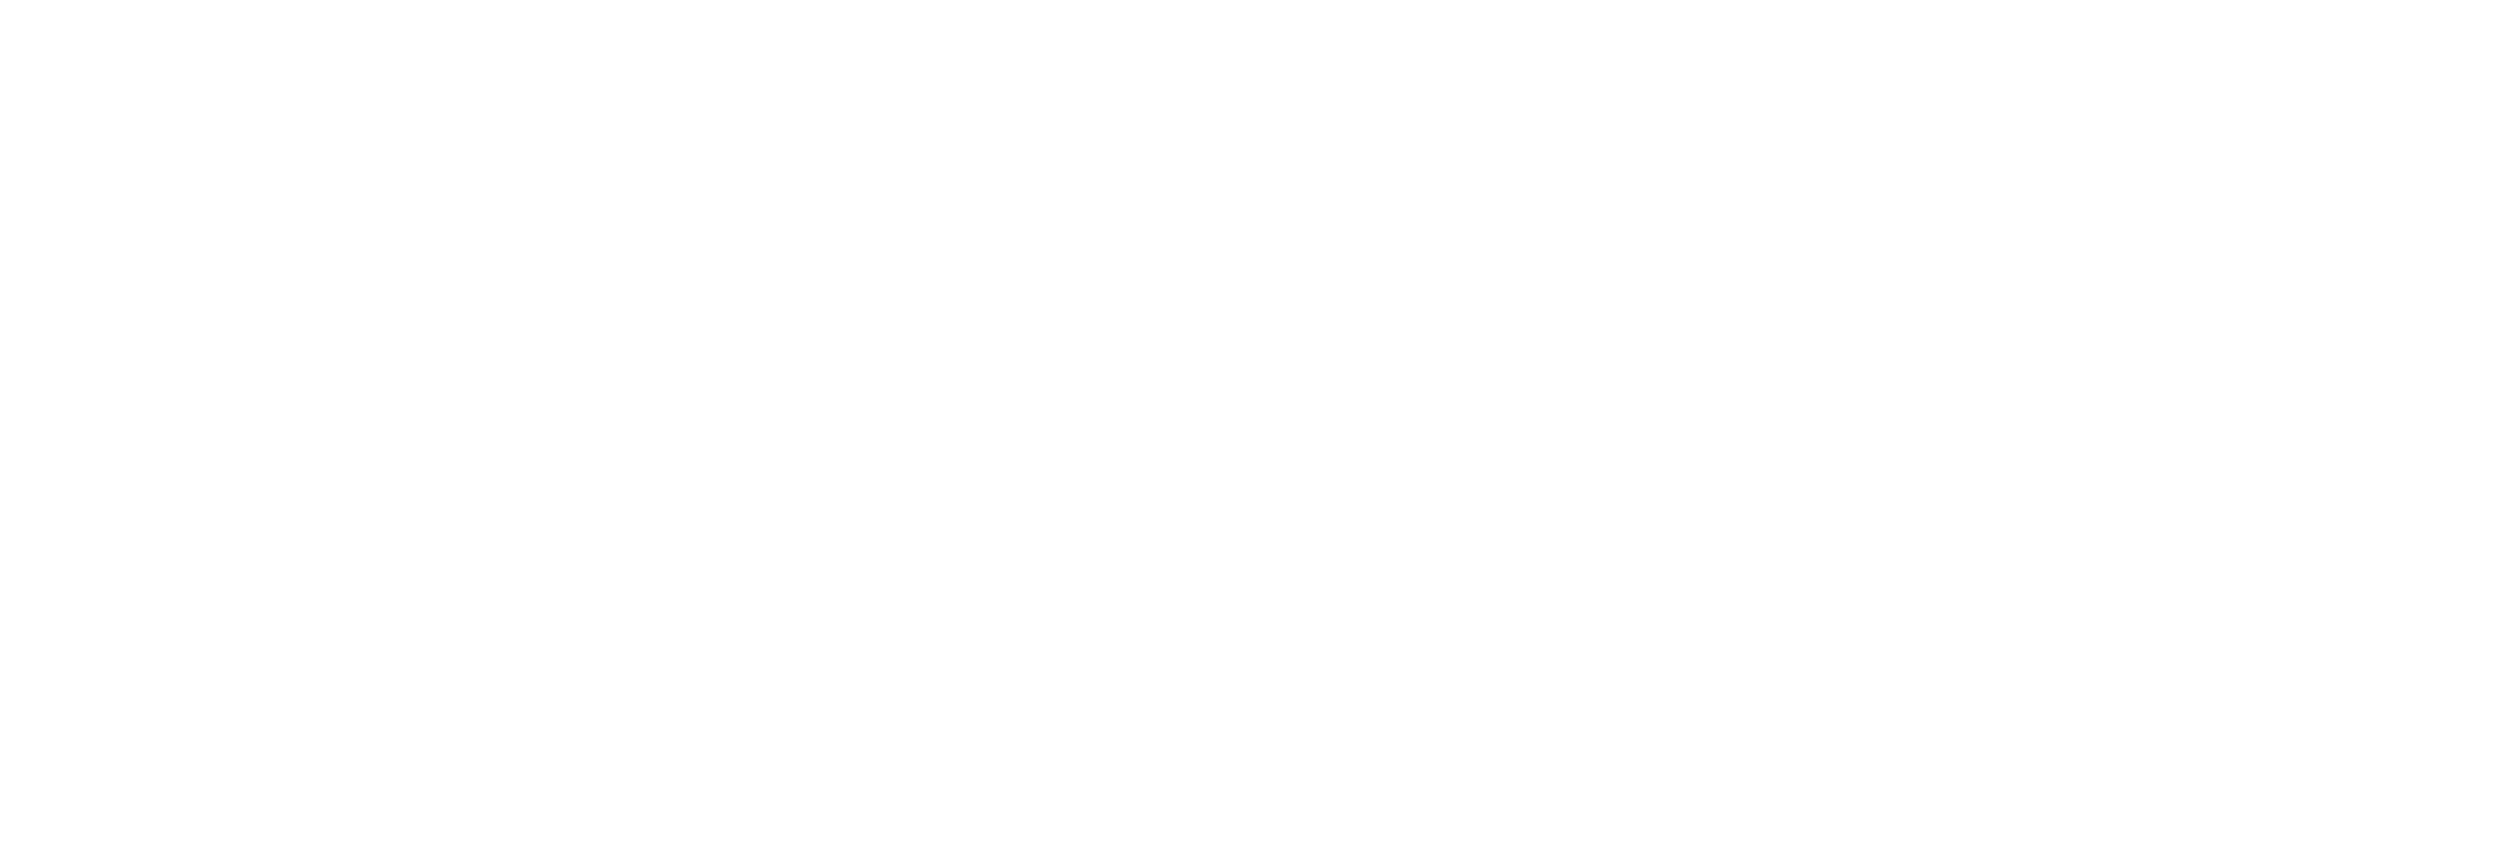 Actum - The Digital Pacemaker